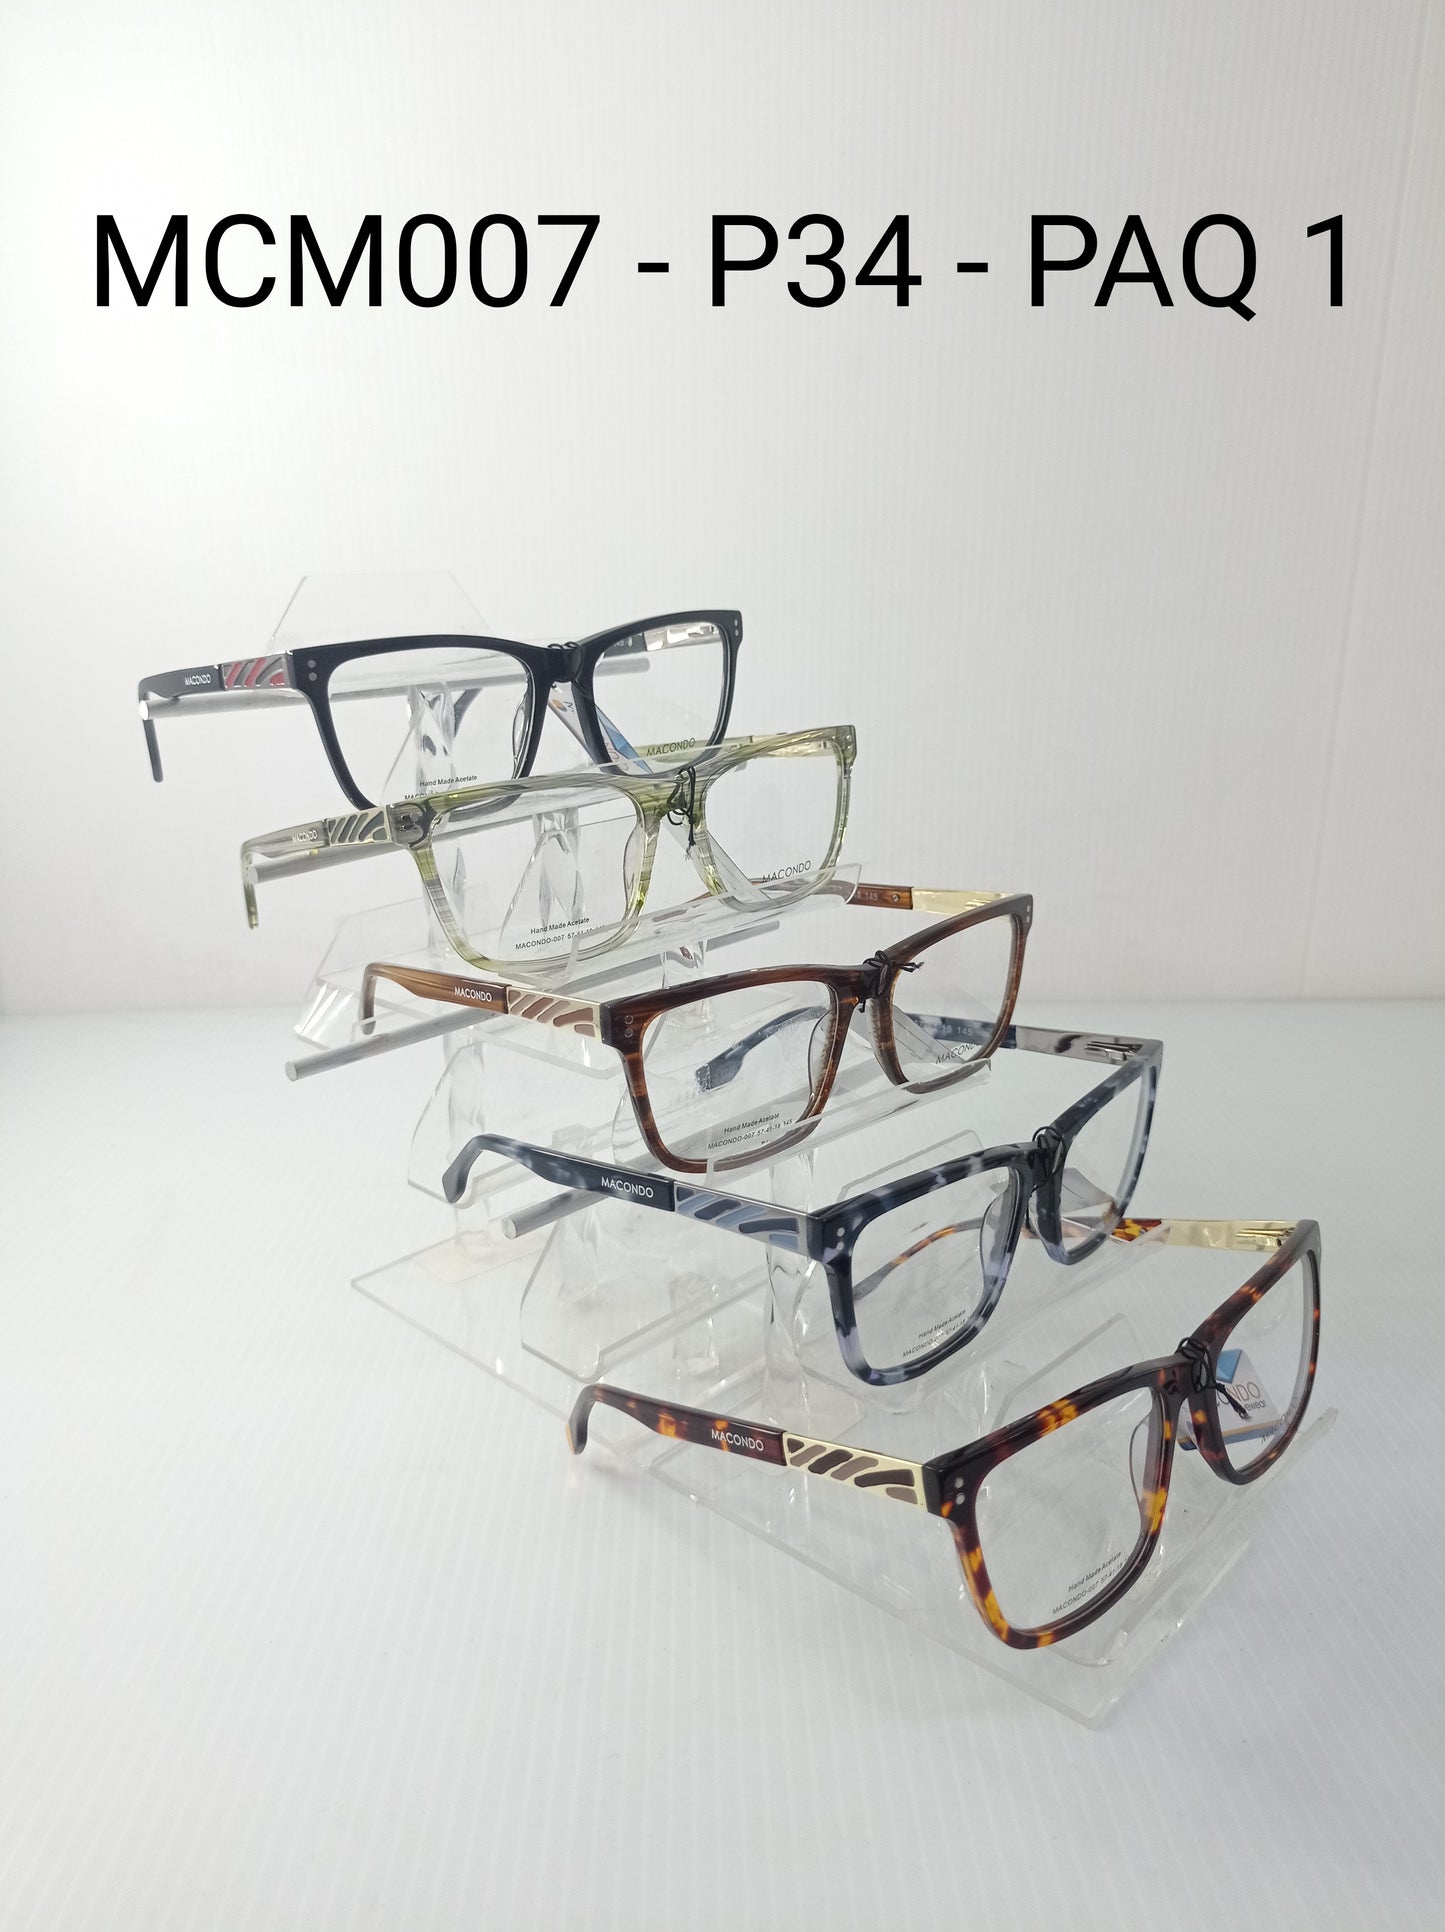 MACONDO - MCM007 - P34